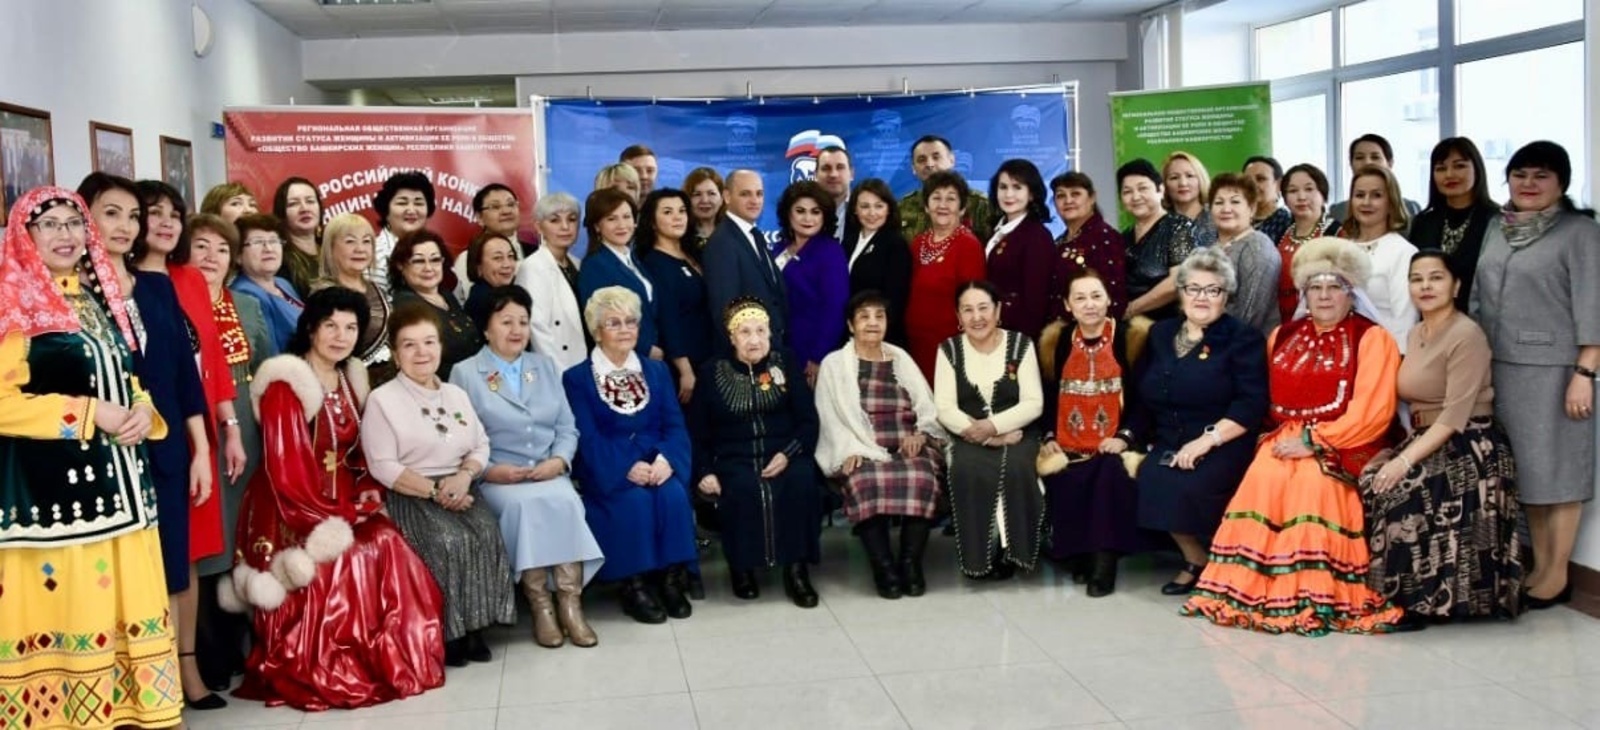 В Уфе на V юбилейном съезде Общества башкирских женщин выбрали председателя